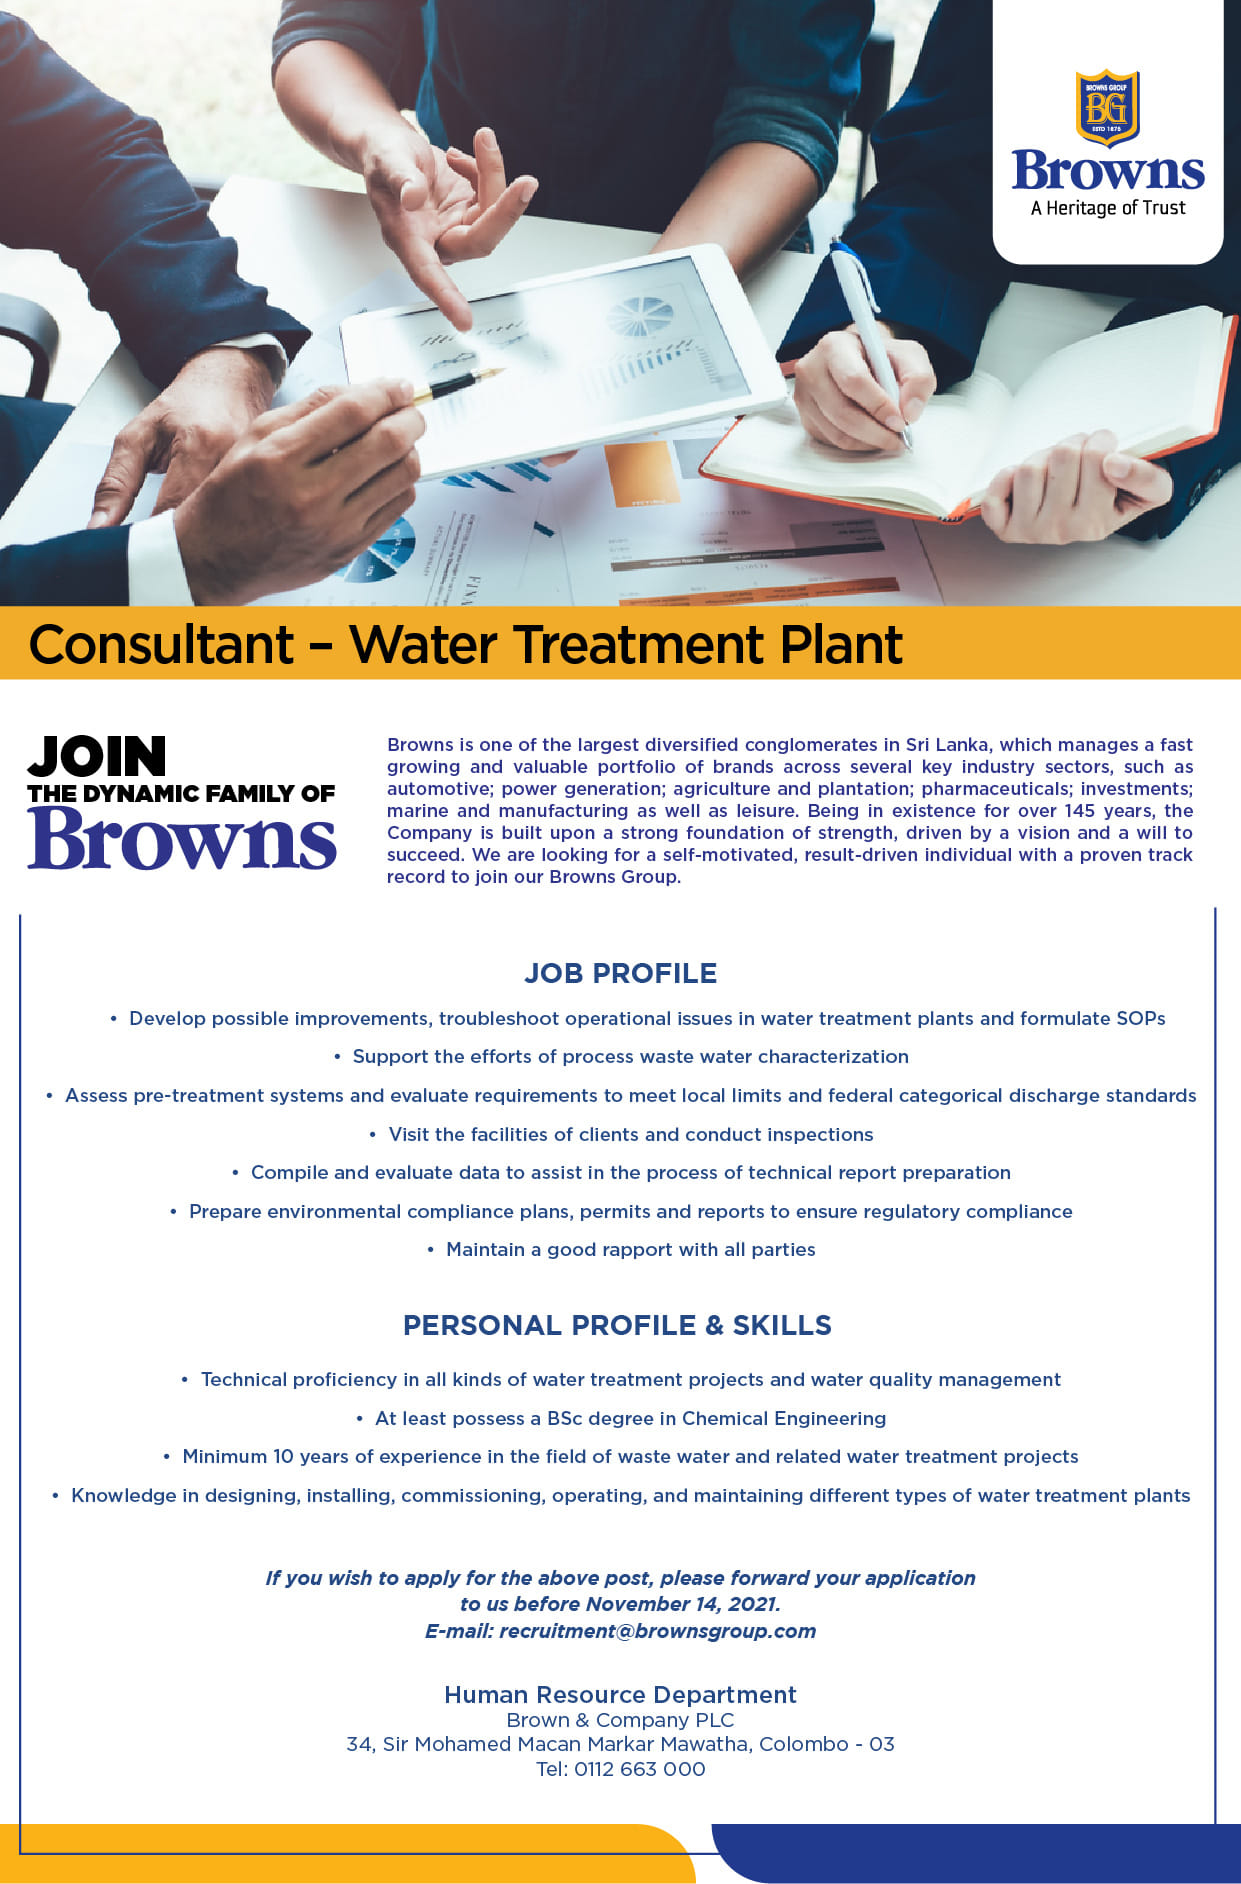 Consultant (Water Treatment Plant) Jobs Vacancies – Brown and Company Job Vacancy